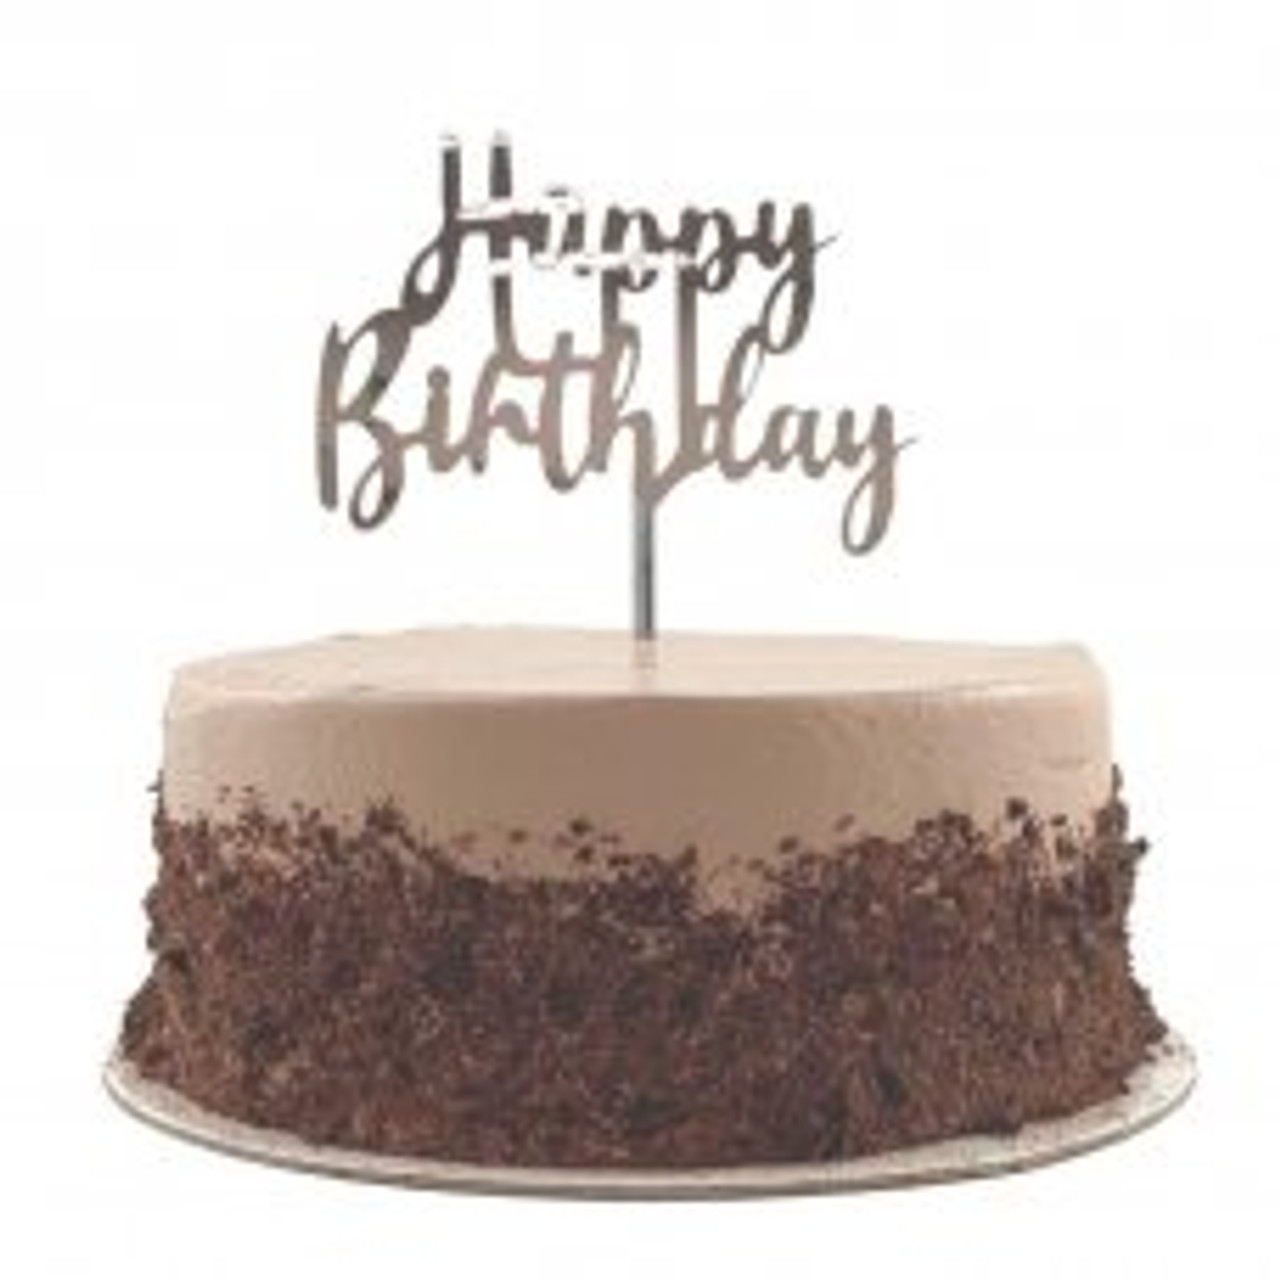 443012 CAKE TOPPER ACRYLIC HAPPY BIRTHDAY SILVER